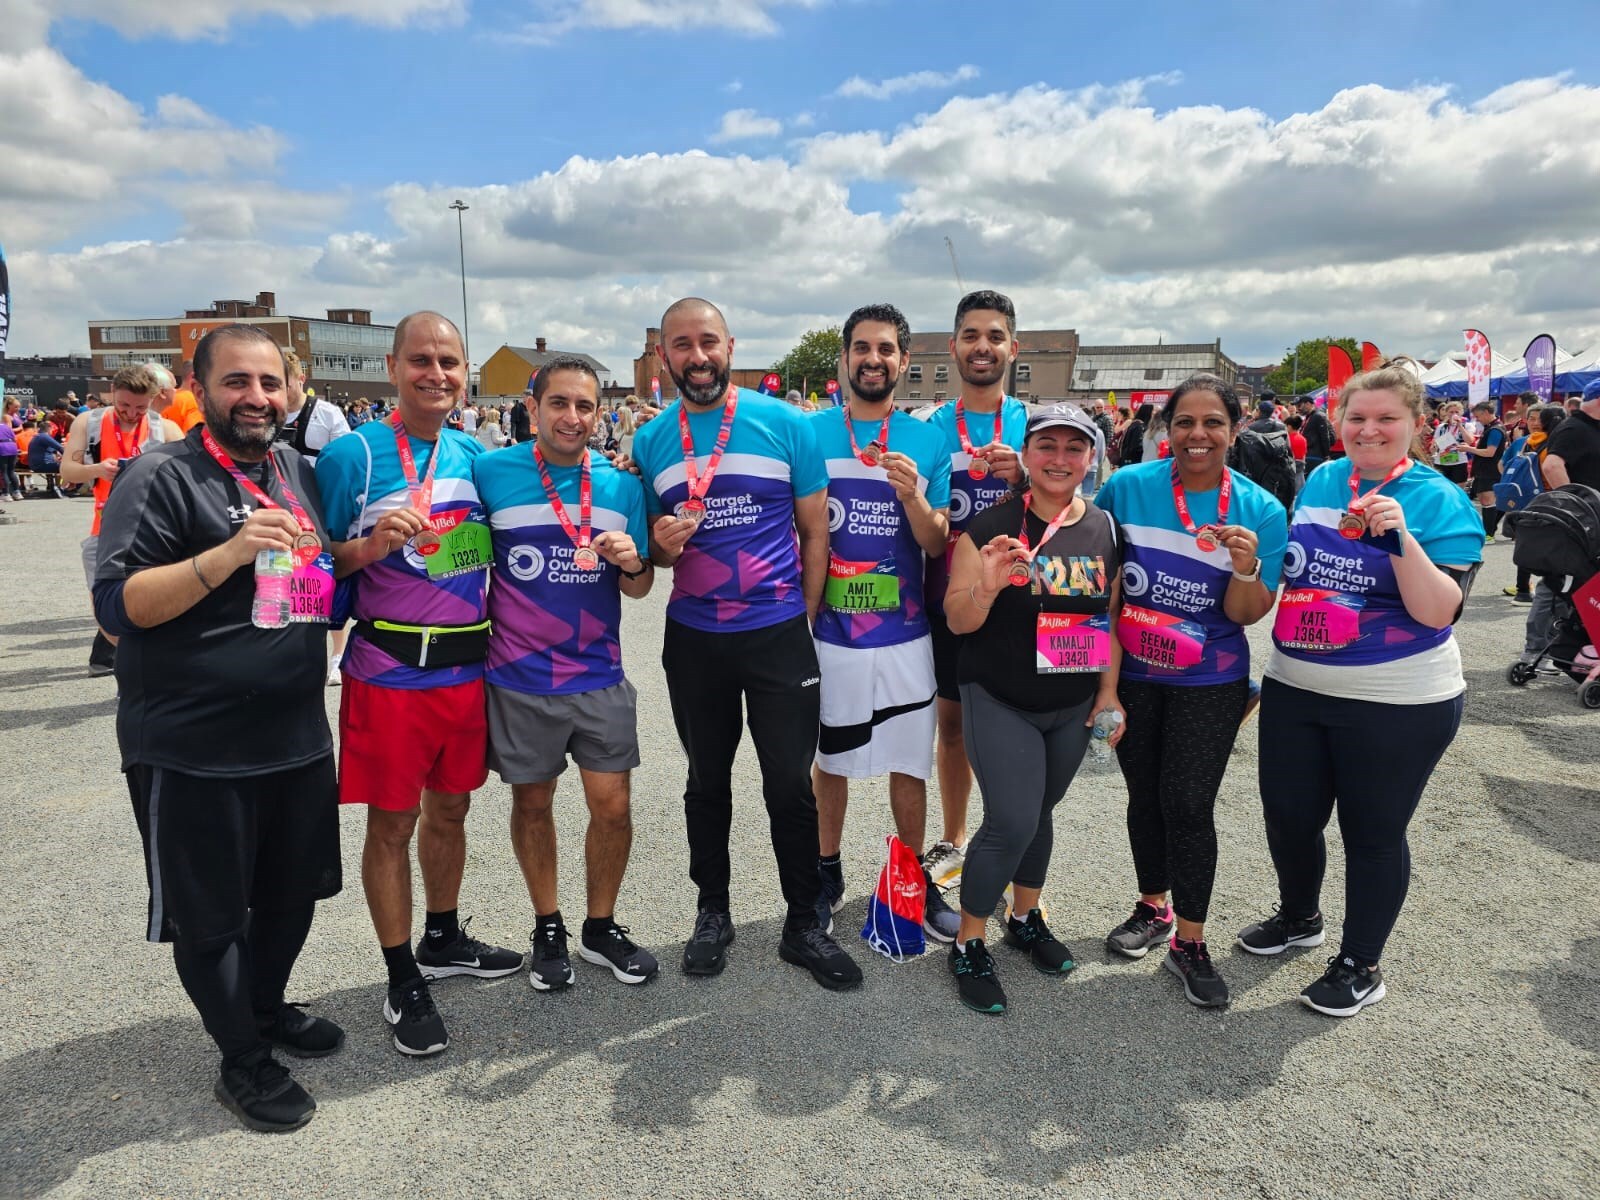 Target Ovarian Cancer: Birmingham 10K run